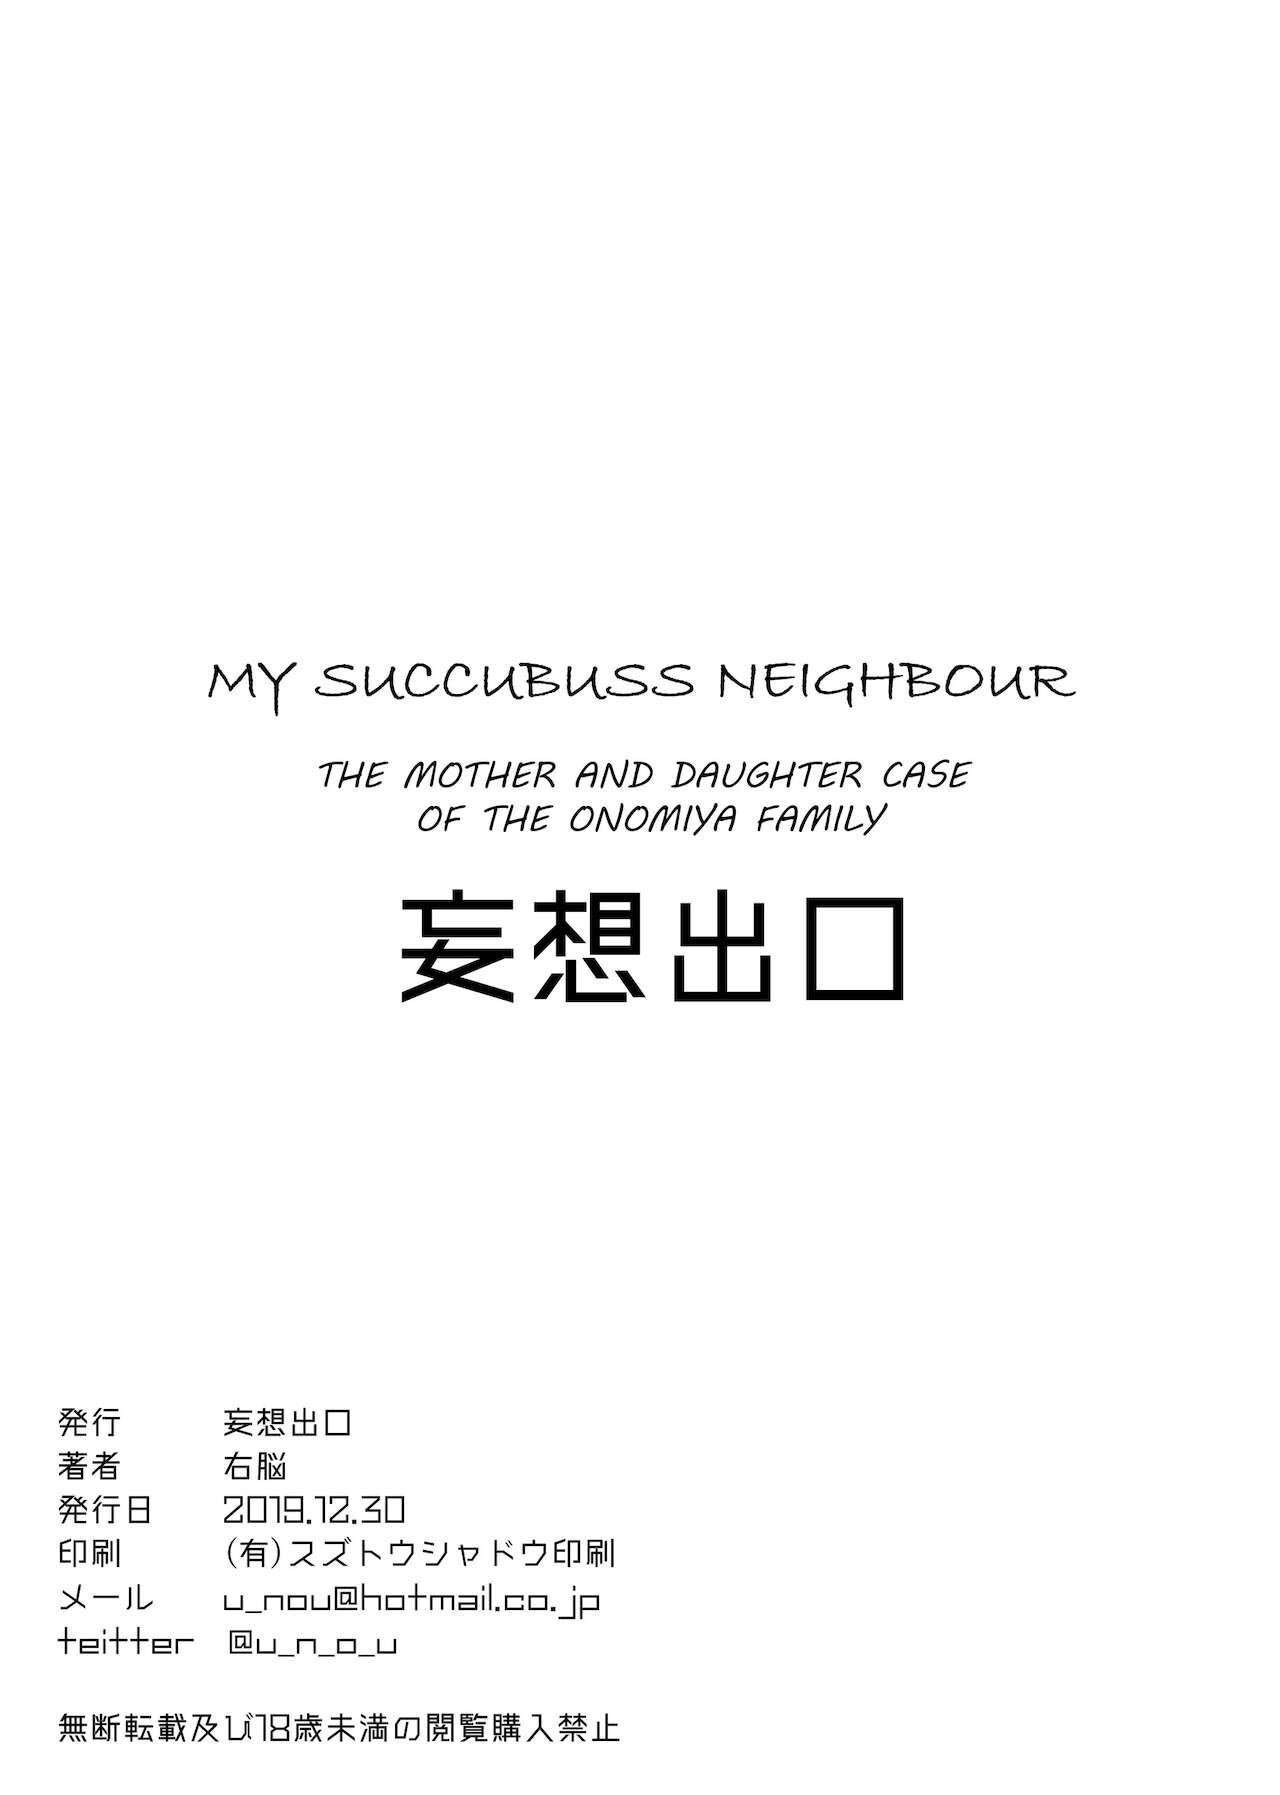 Succubus no Rinjin Onomiya-ke no Oyako | My Succubus Neighbour, the Mother and Daughter Case of the Onomiya Family - Foto 38